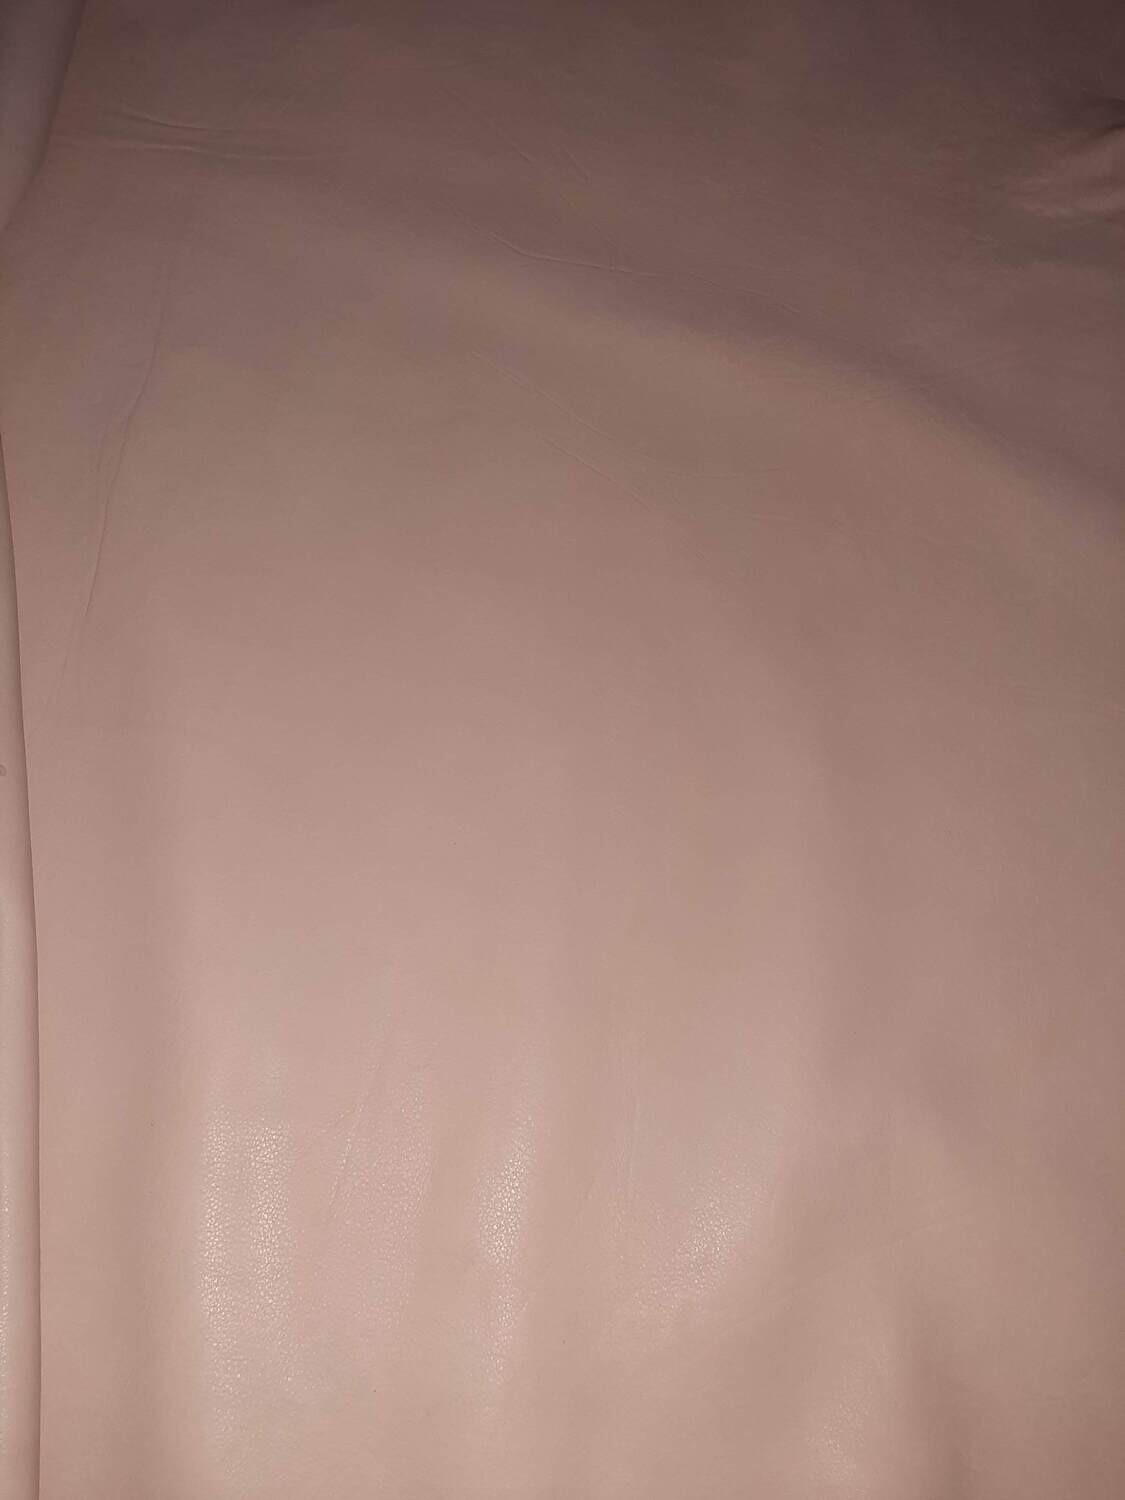 Leather bovine milled pink color